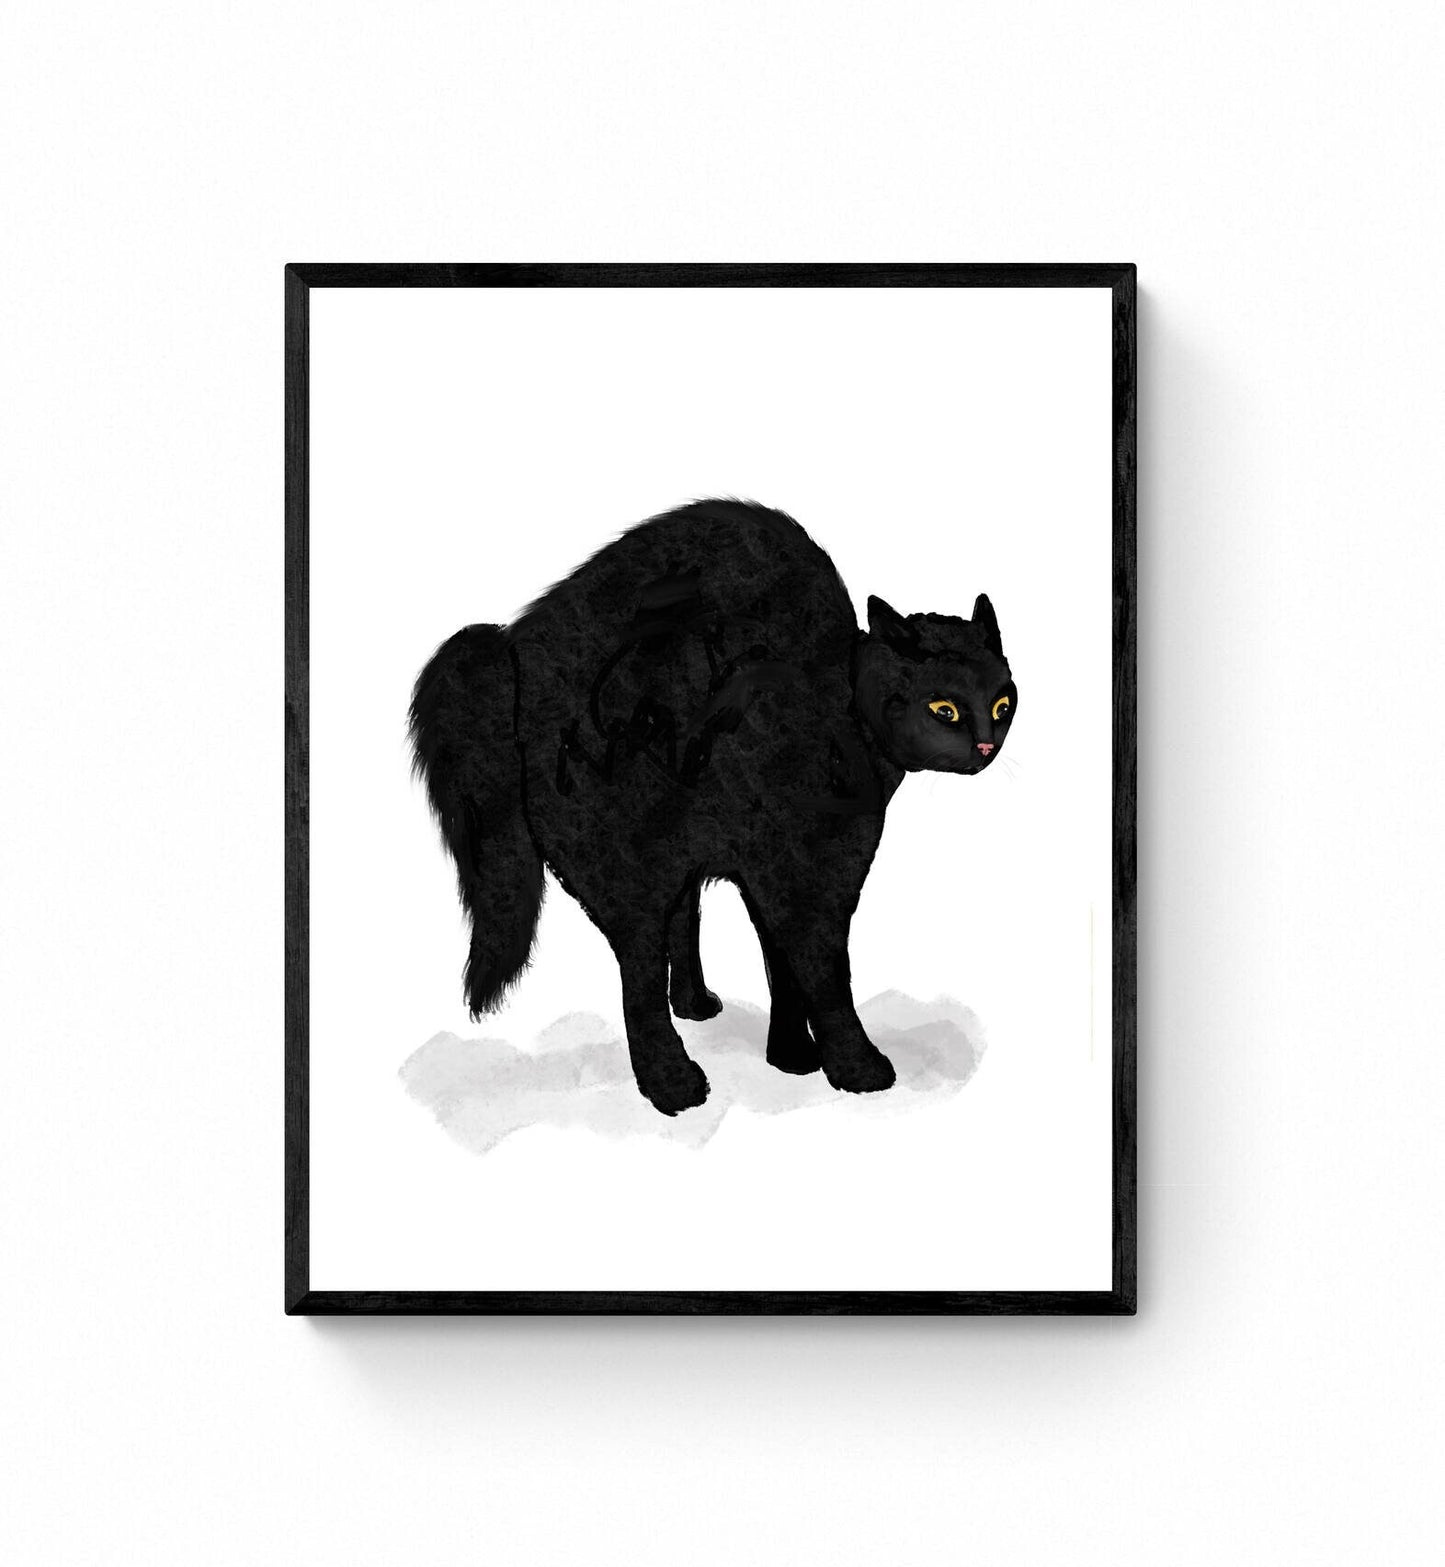 Scared Black Cat Print, Halloween Black Cat Artwork, Feral Cat Drawing, Cat Illustration, Defensive Black Cat Painting, Holiday Wall Art